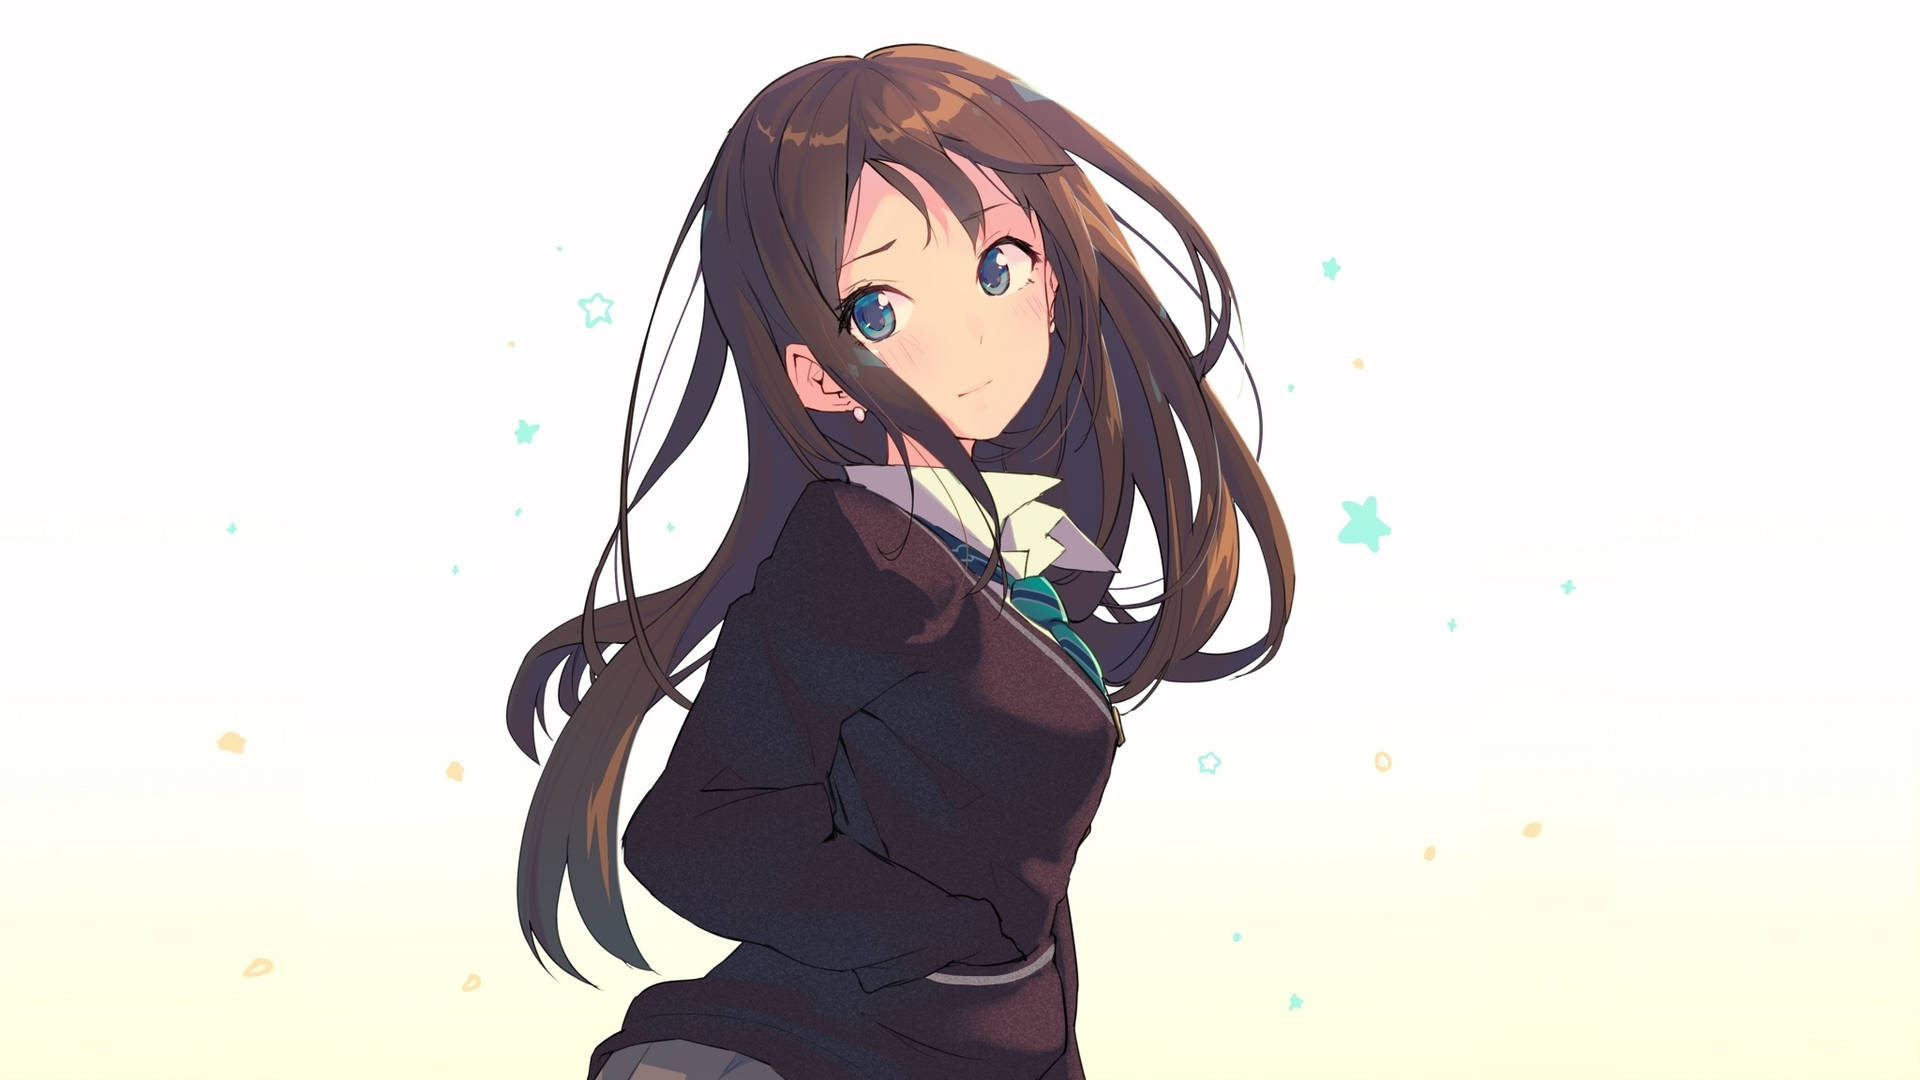 Anime Art Girl Wearing Uniform